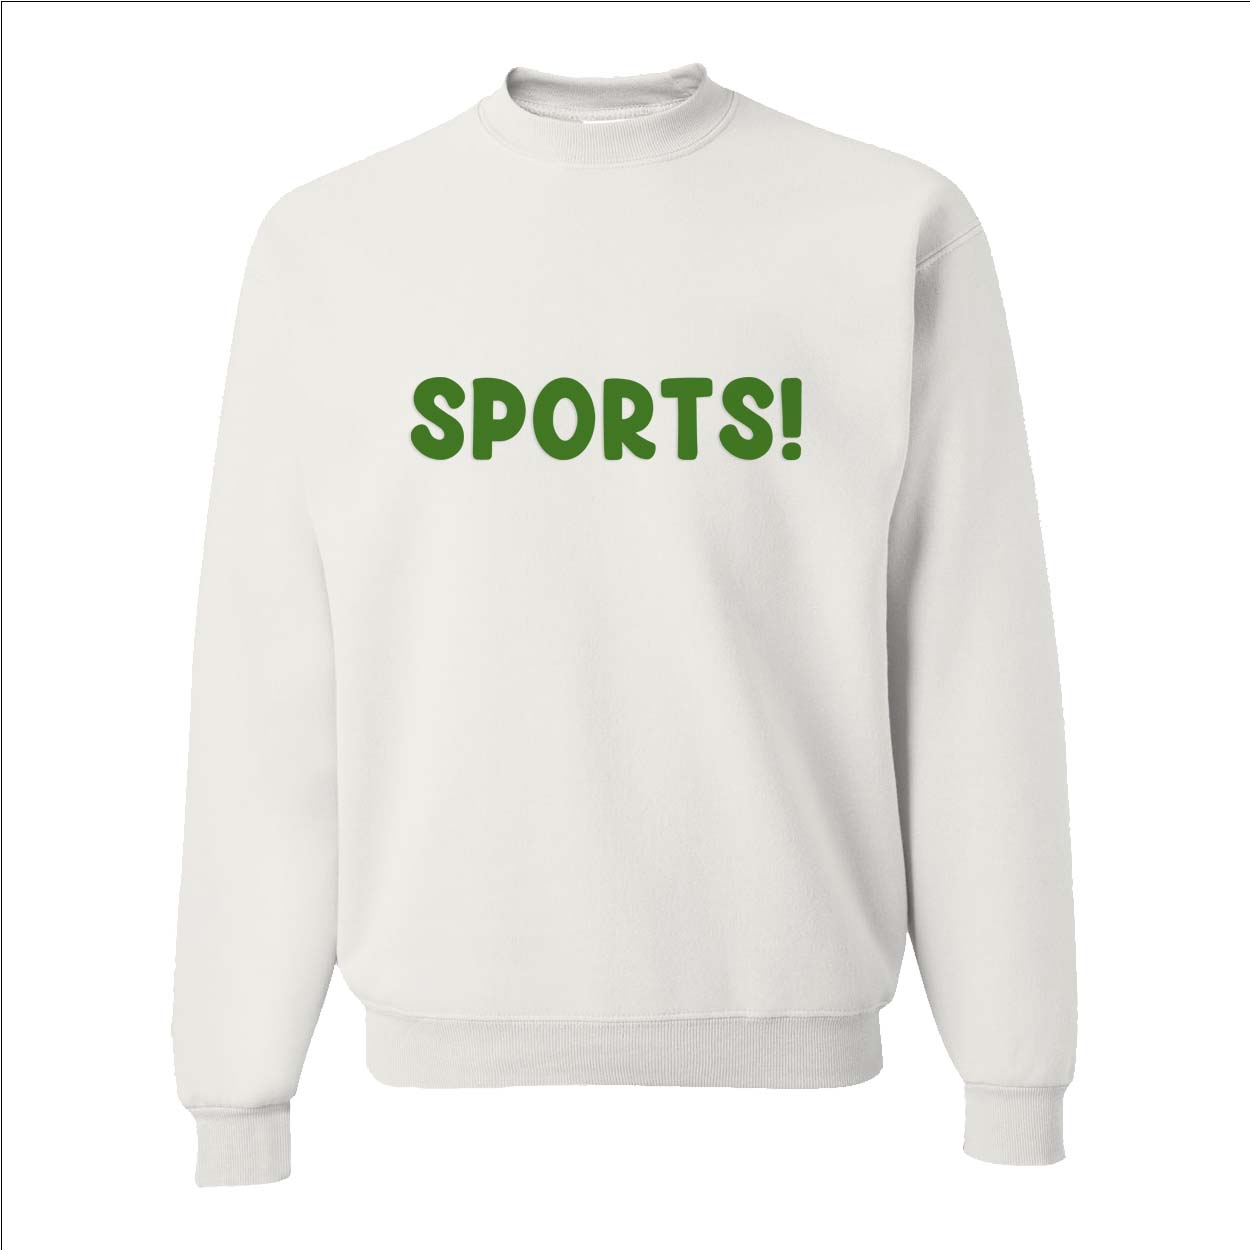 Sports! Sweatshirt